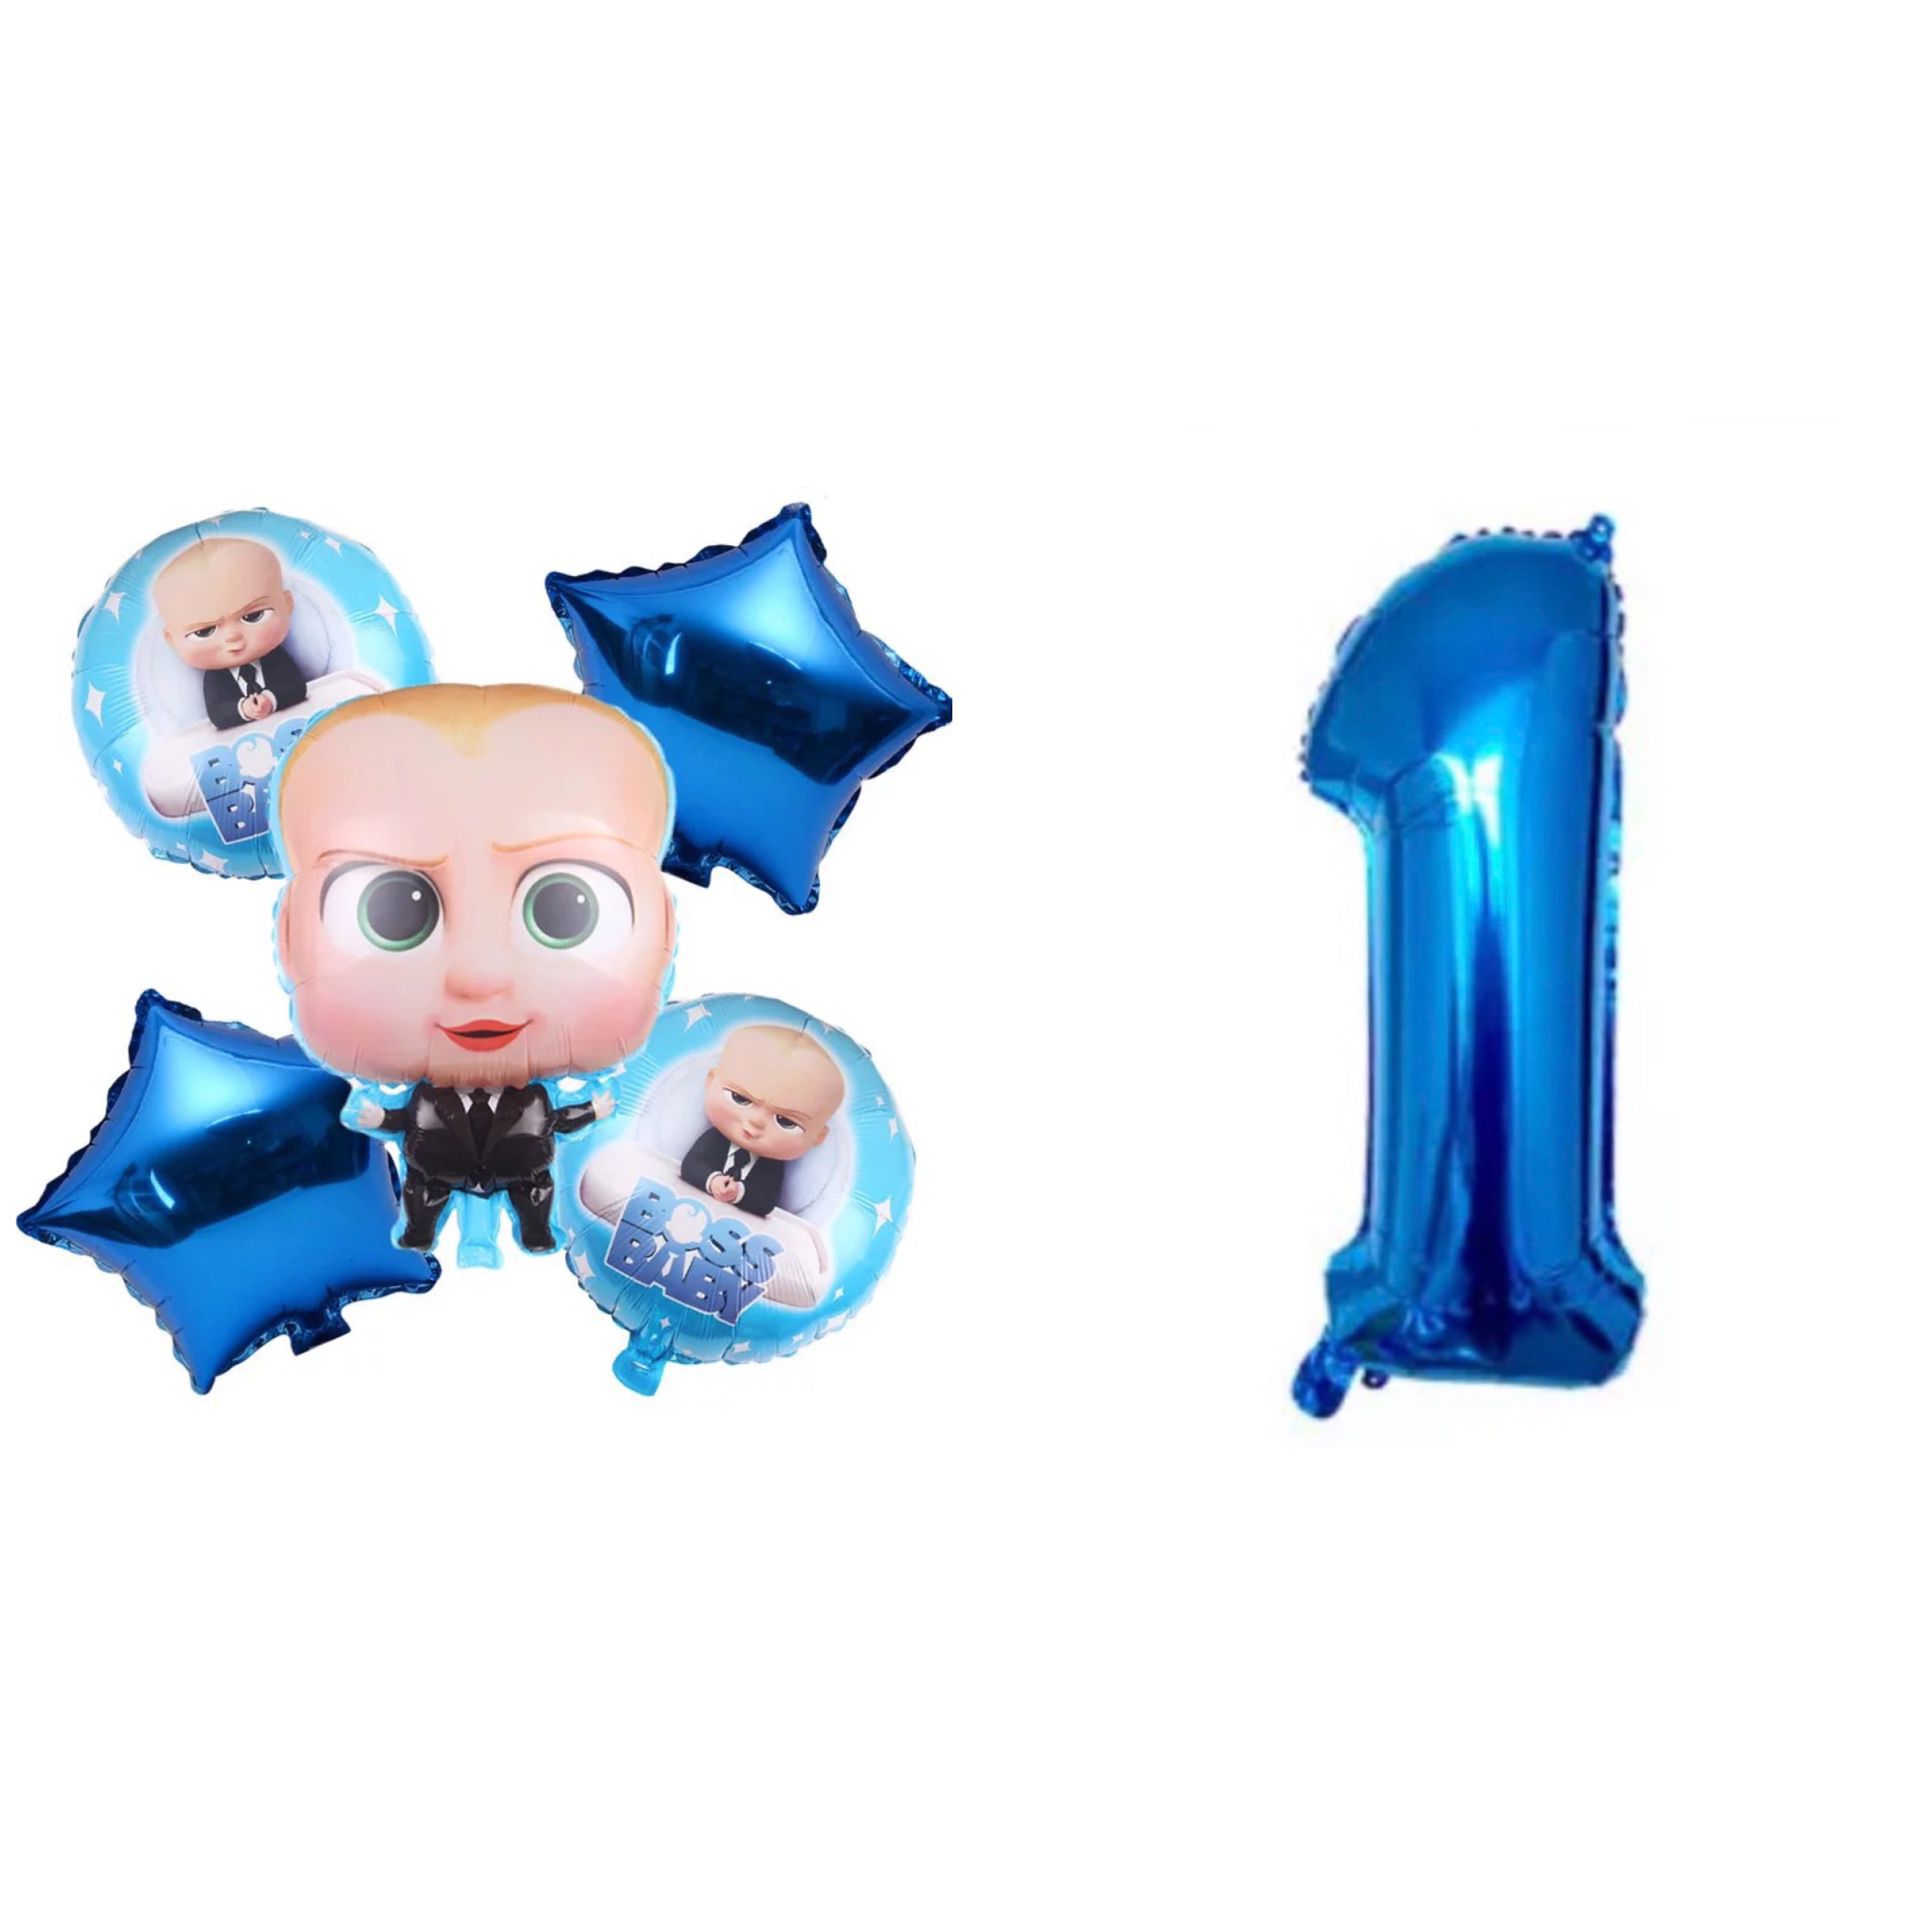 Boss Baby Theme Foil Balloons 6pcs Set.